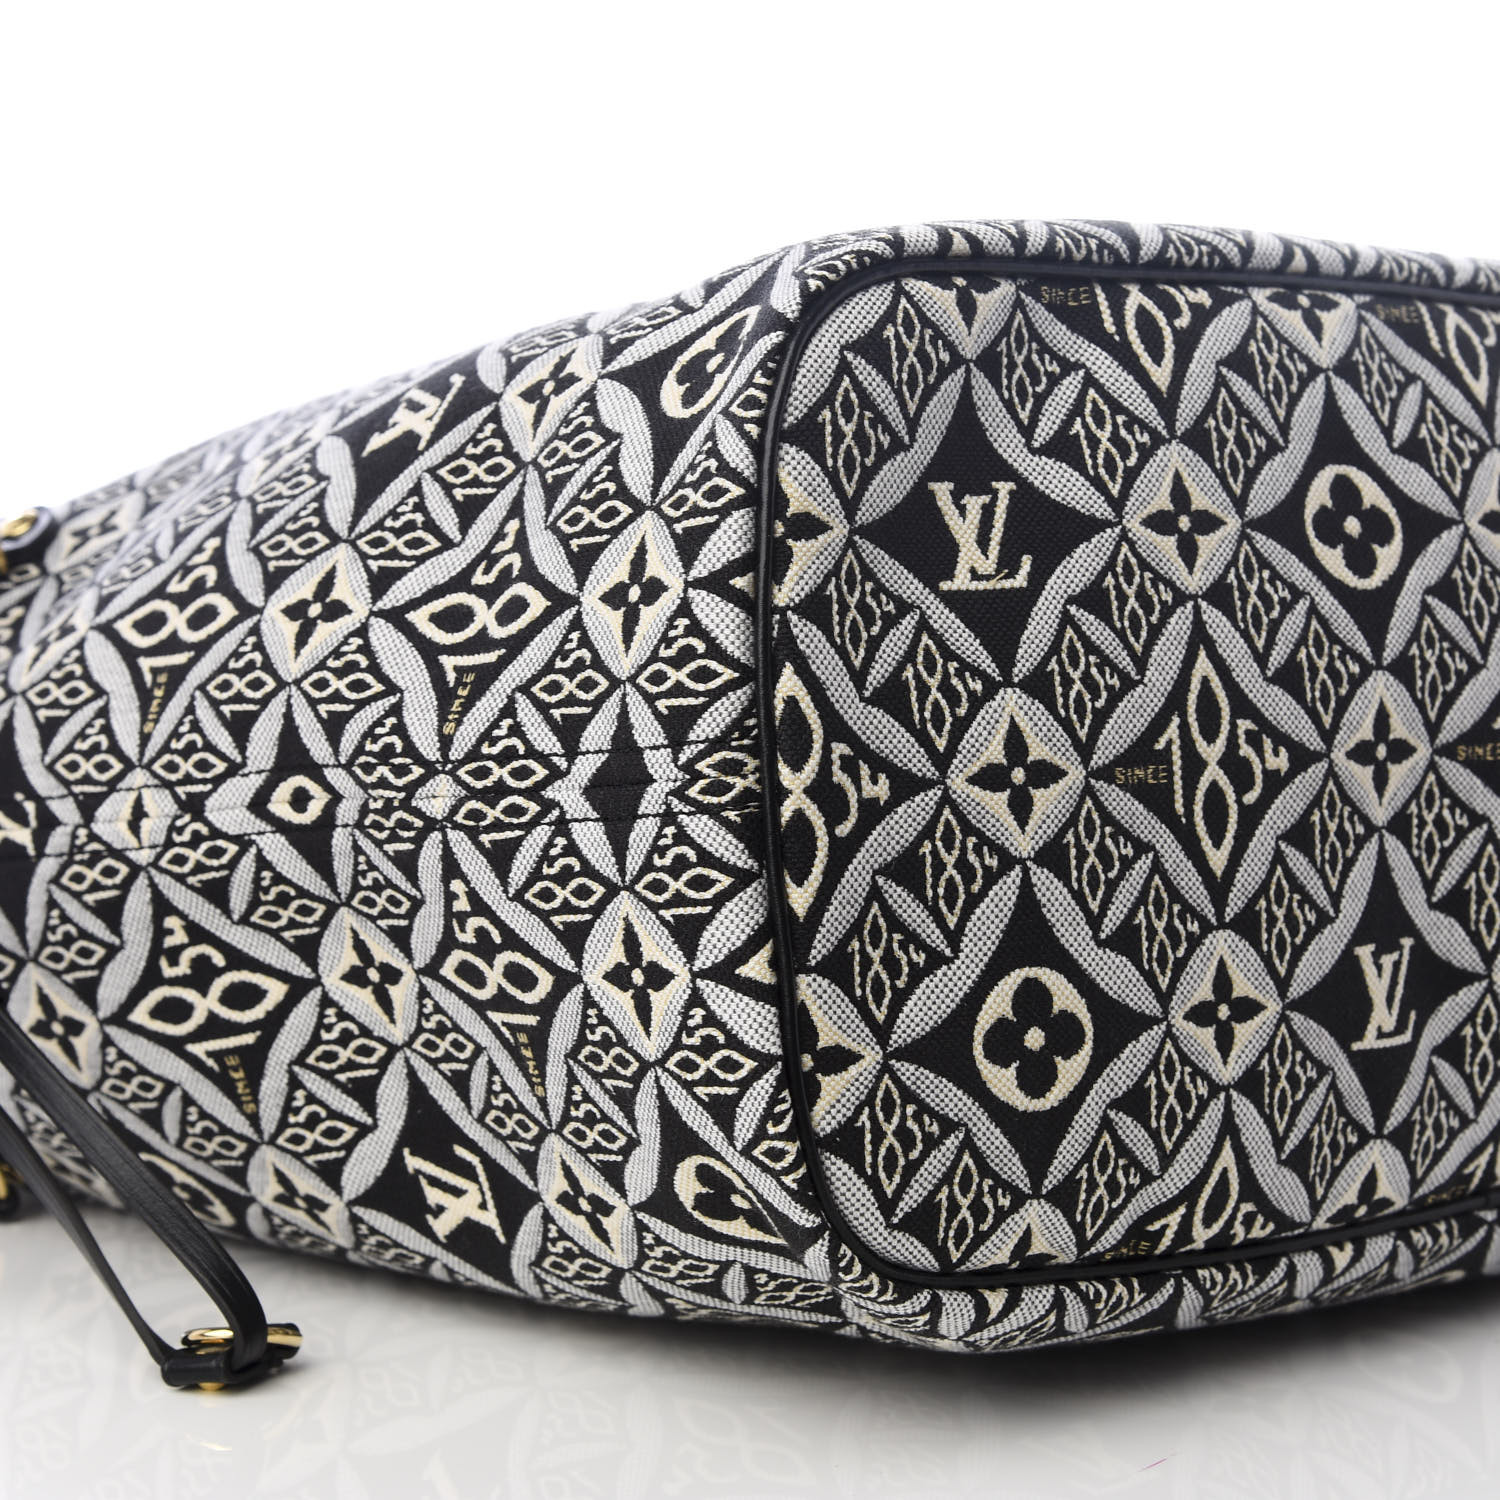 Louis Vuitton NEVERFULL Since 1854 neverfull mm (M57273, M57230)